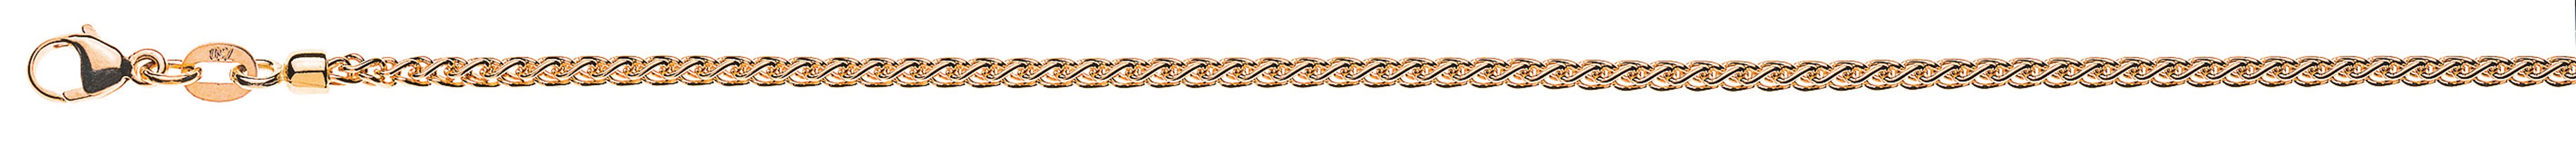 AURONOS Prestige Collier chaîne en or rose 18K 40cm 2.15mm